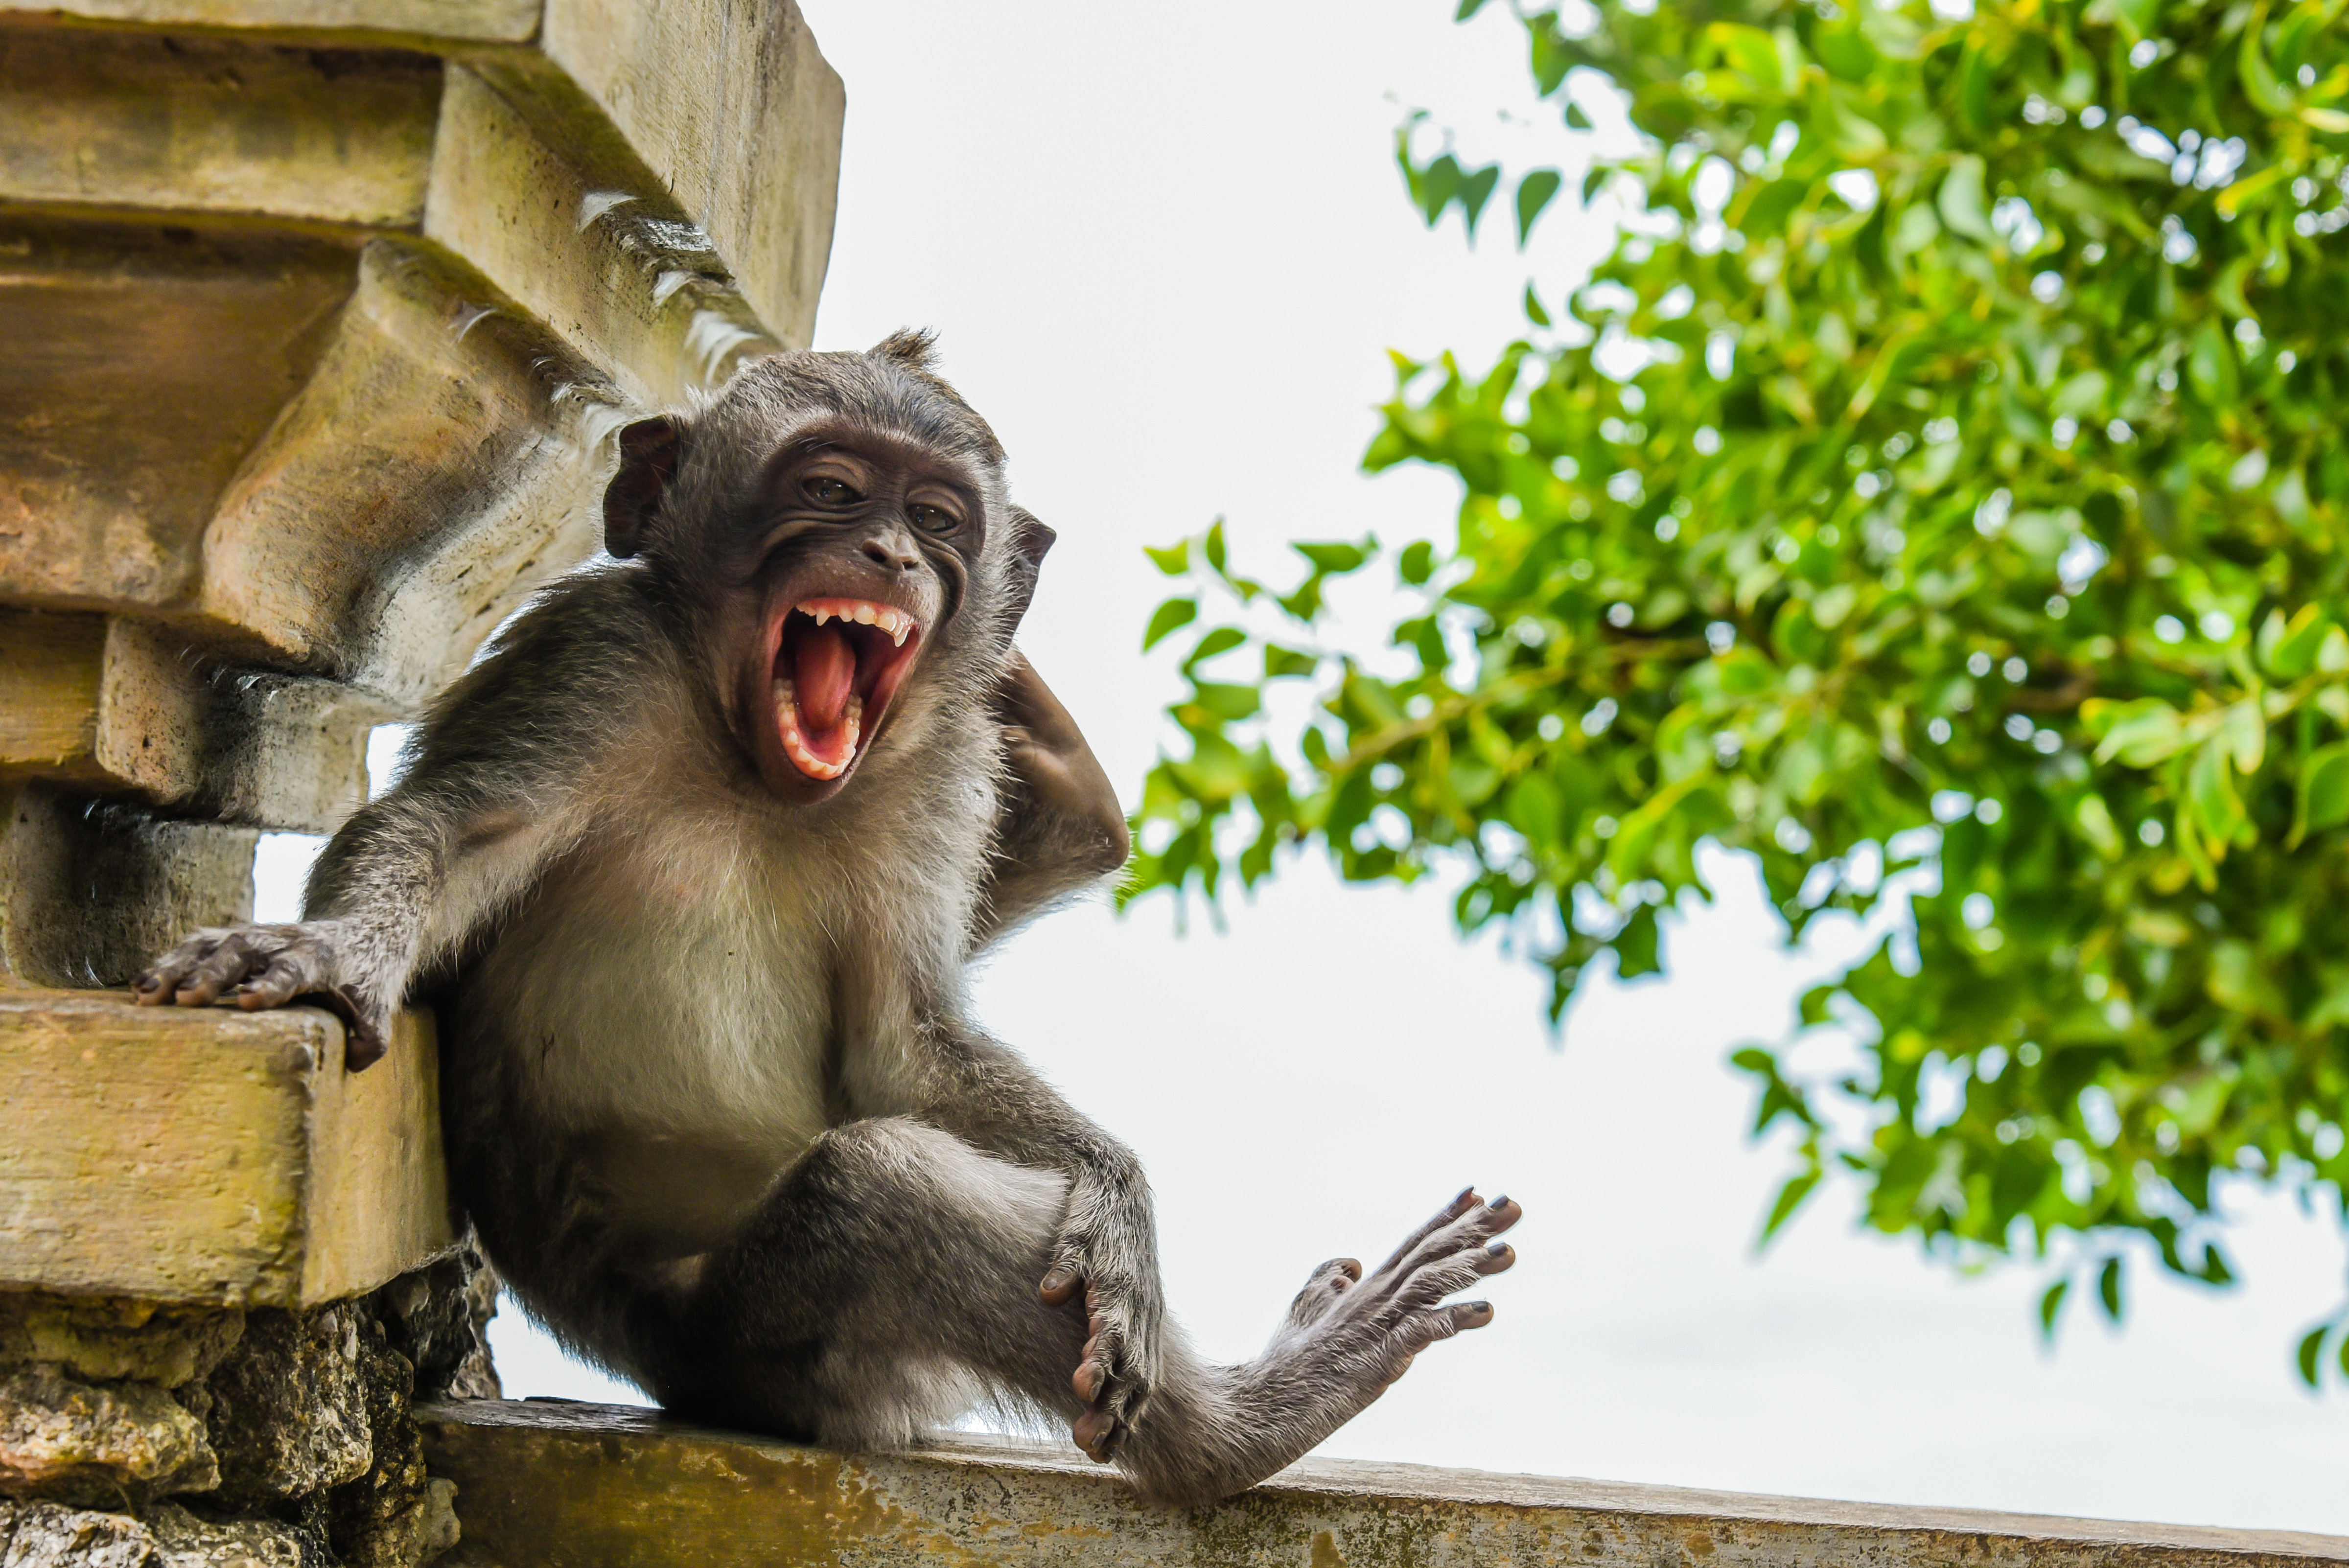 Macaque striking a pose